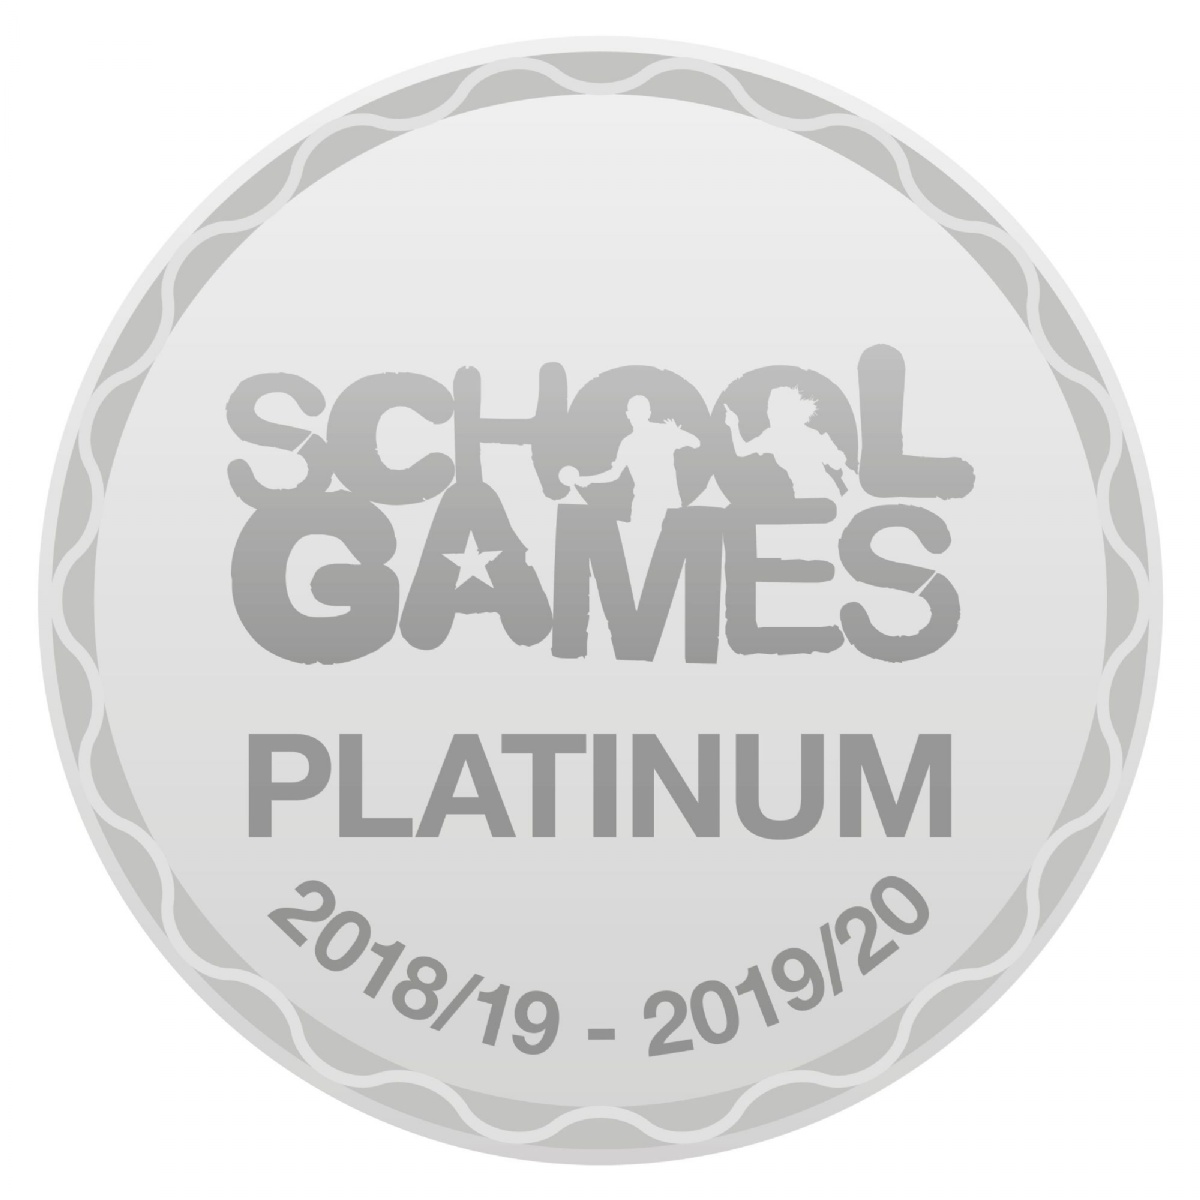 School Games Silver Level Mark Award - Heartlands Academy